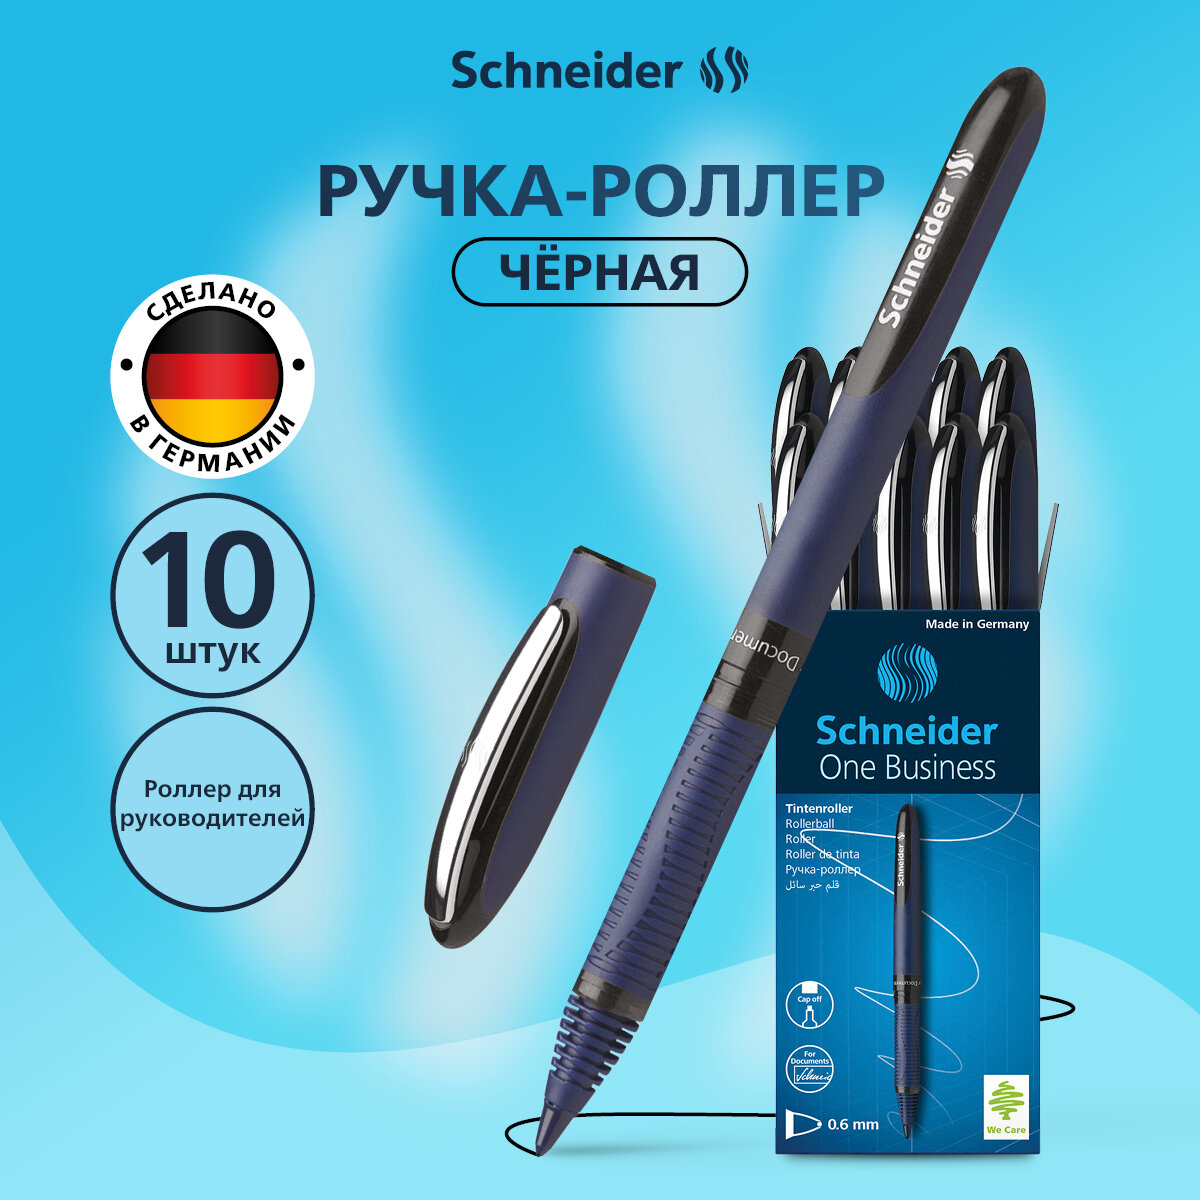 Ручка-роллер Schneider "One Business" черная, 0,8мм, одноразовая, упаковка 10 шт.